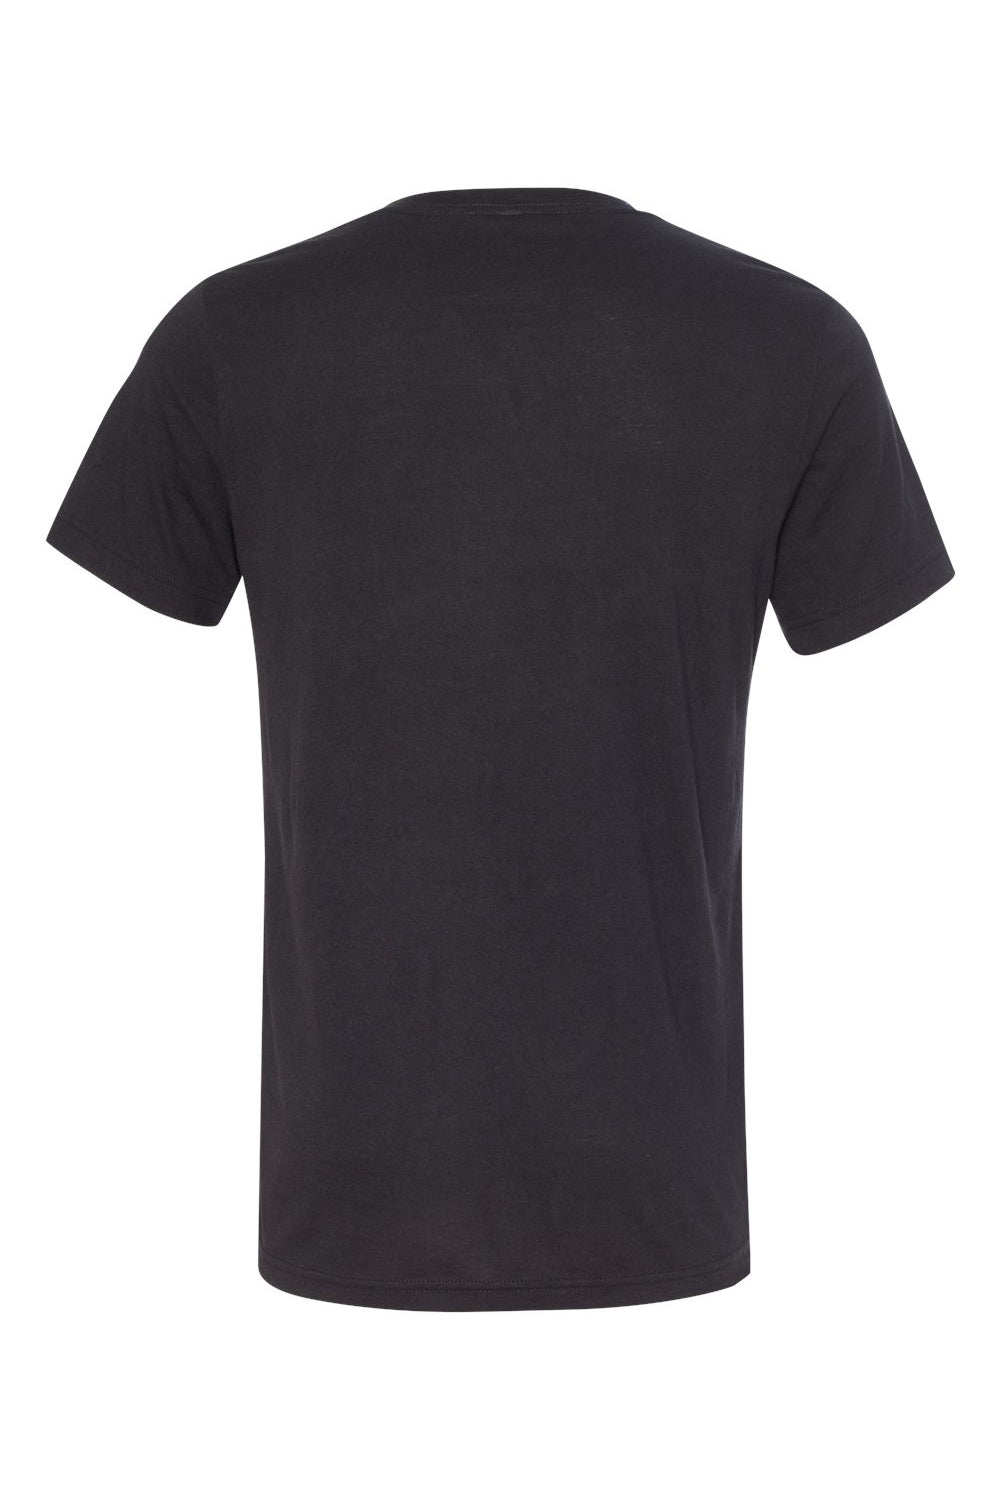 Bella + Canvas BC3415/3415C/3415 Mens Short Sleeve V-Neck T-Shirt Solid Black Flat Back